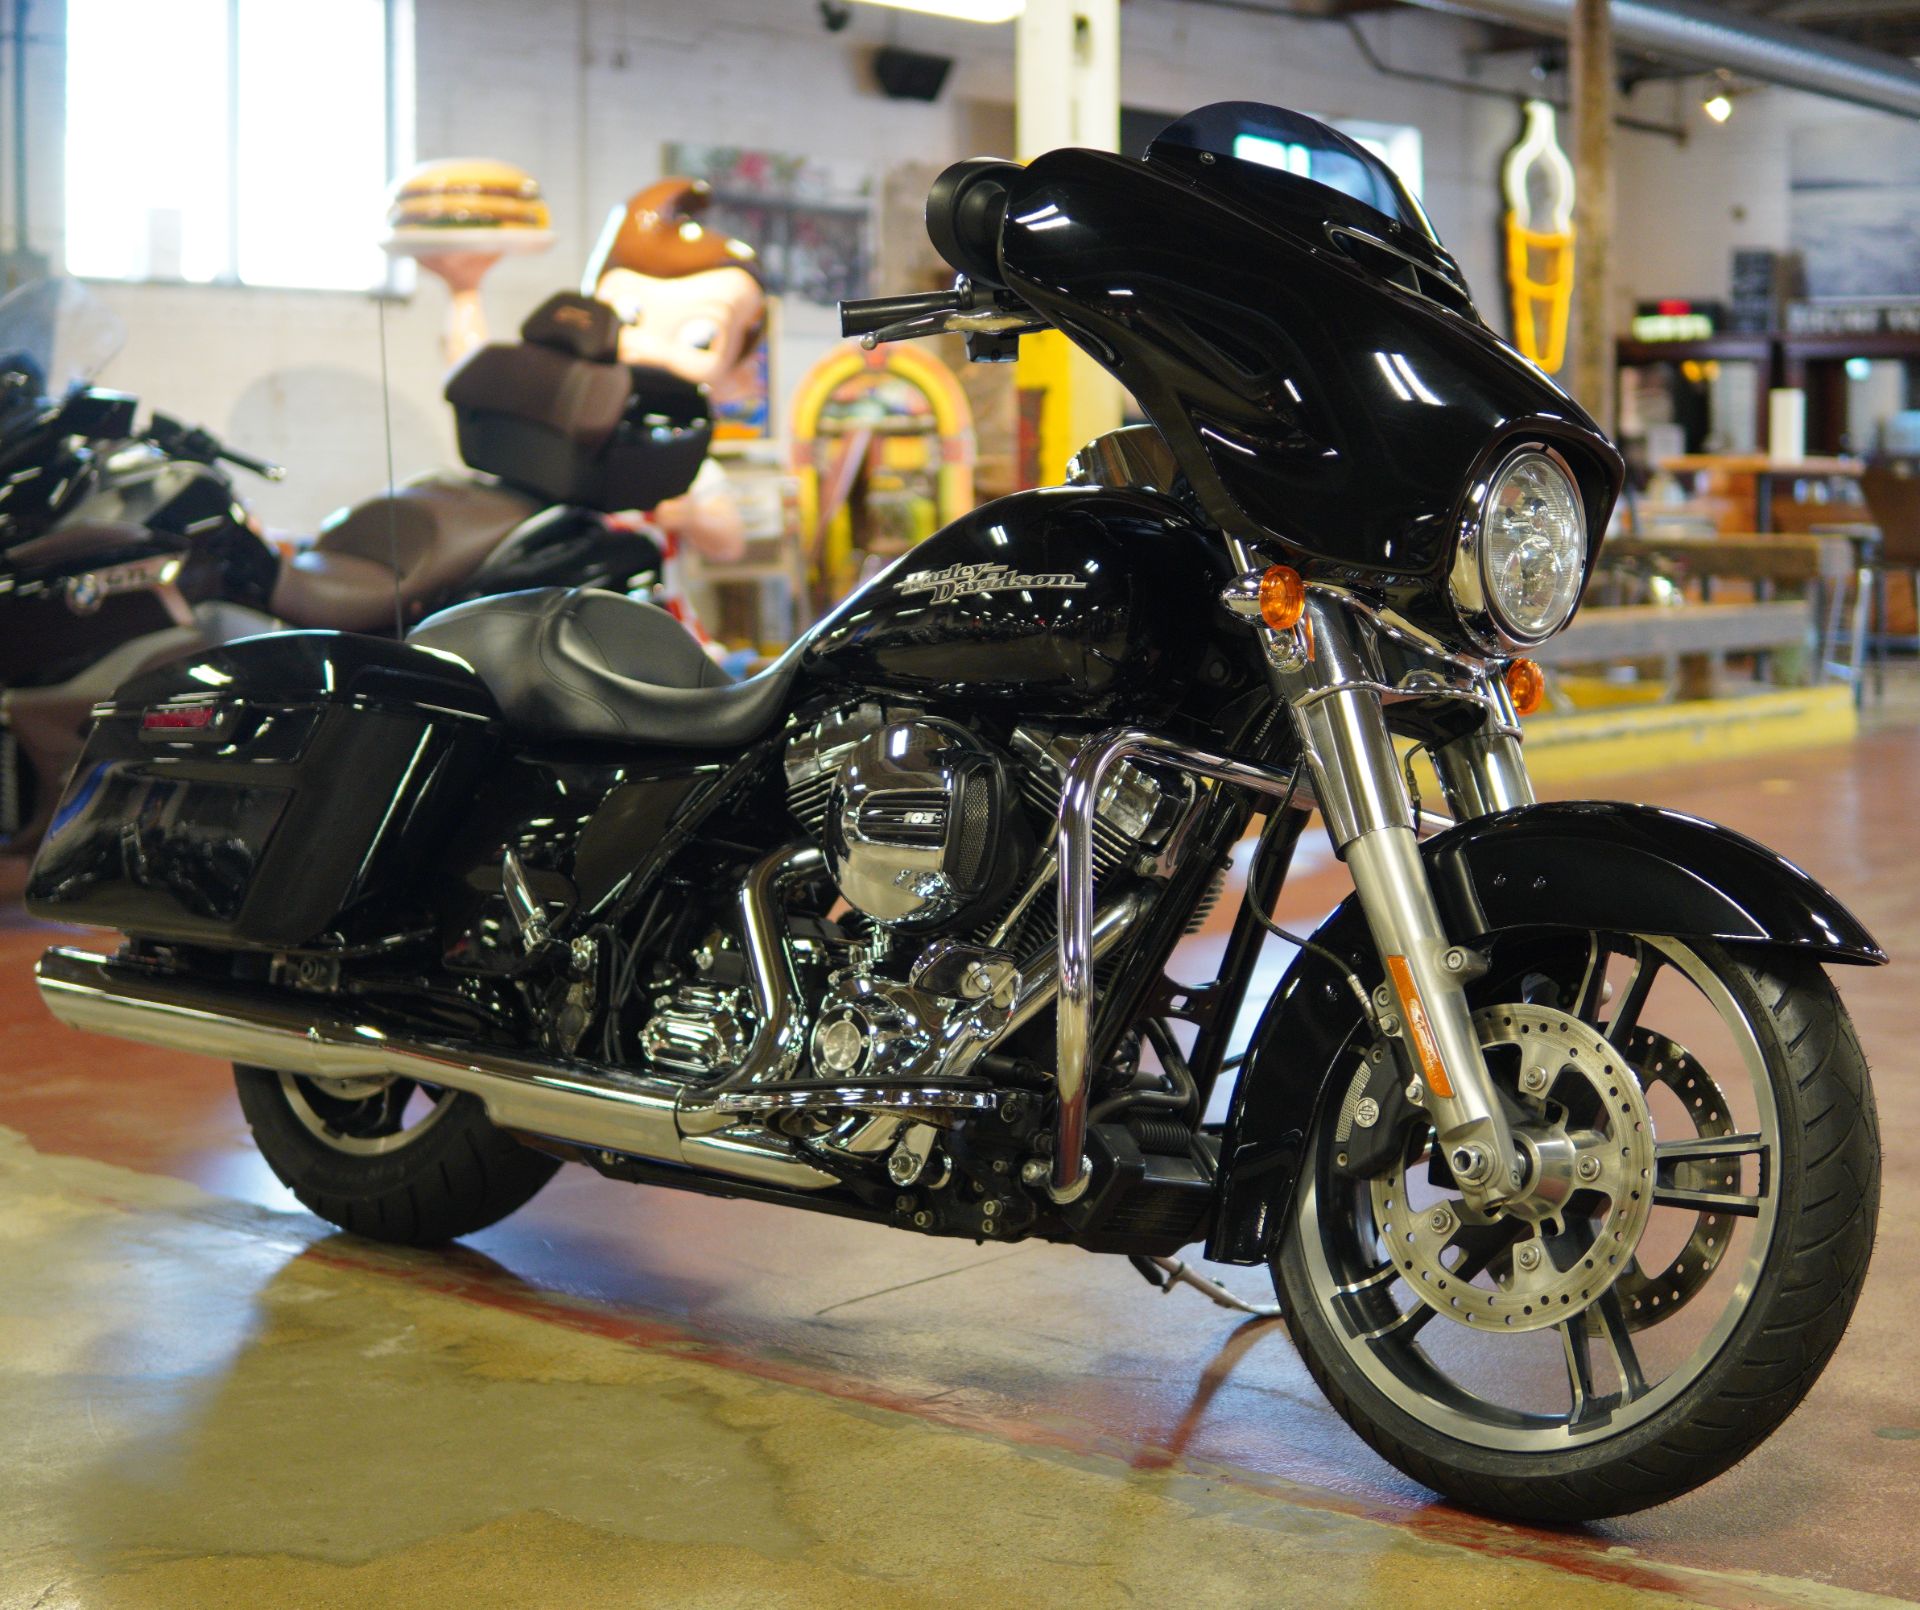 2014 Harley-Davidson Street Glide® in New London, Connecticut - Photo 2